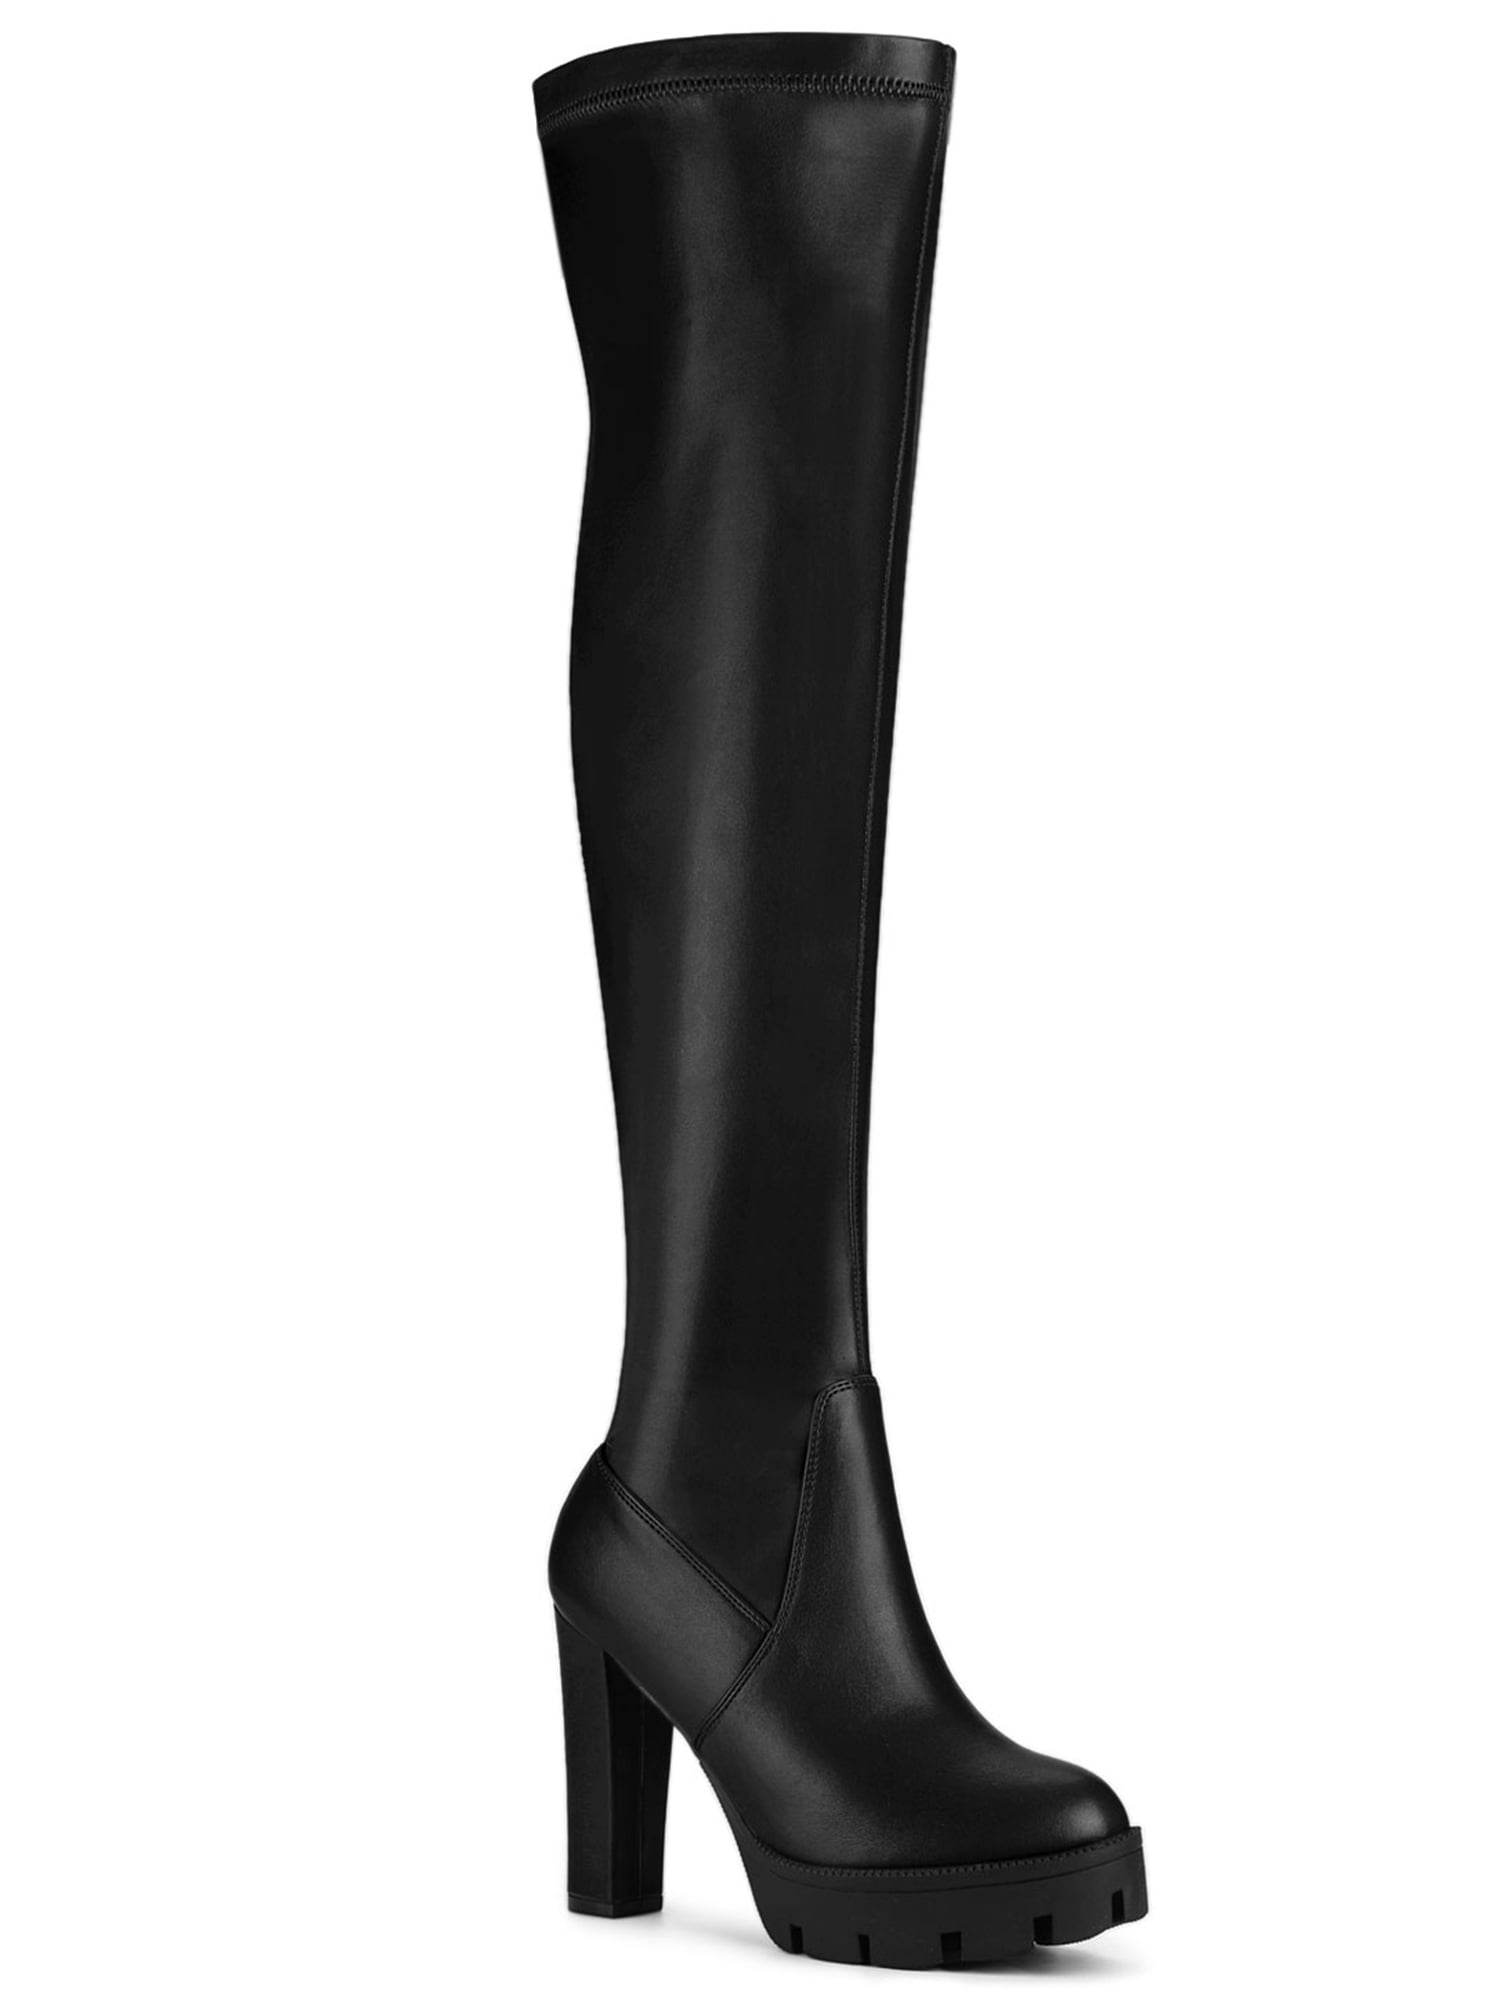 Ladies Women Black Over The Knee Stiletto Heel Platform Boot Size 3-8 